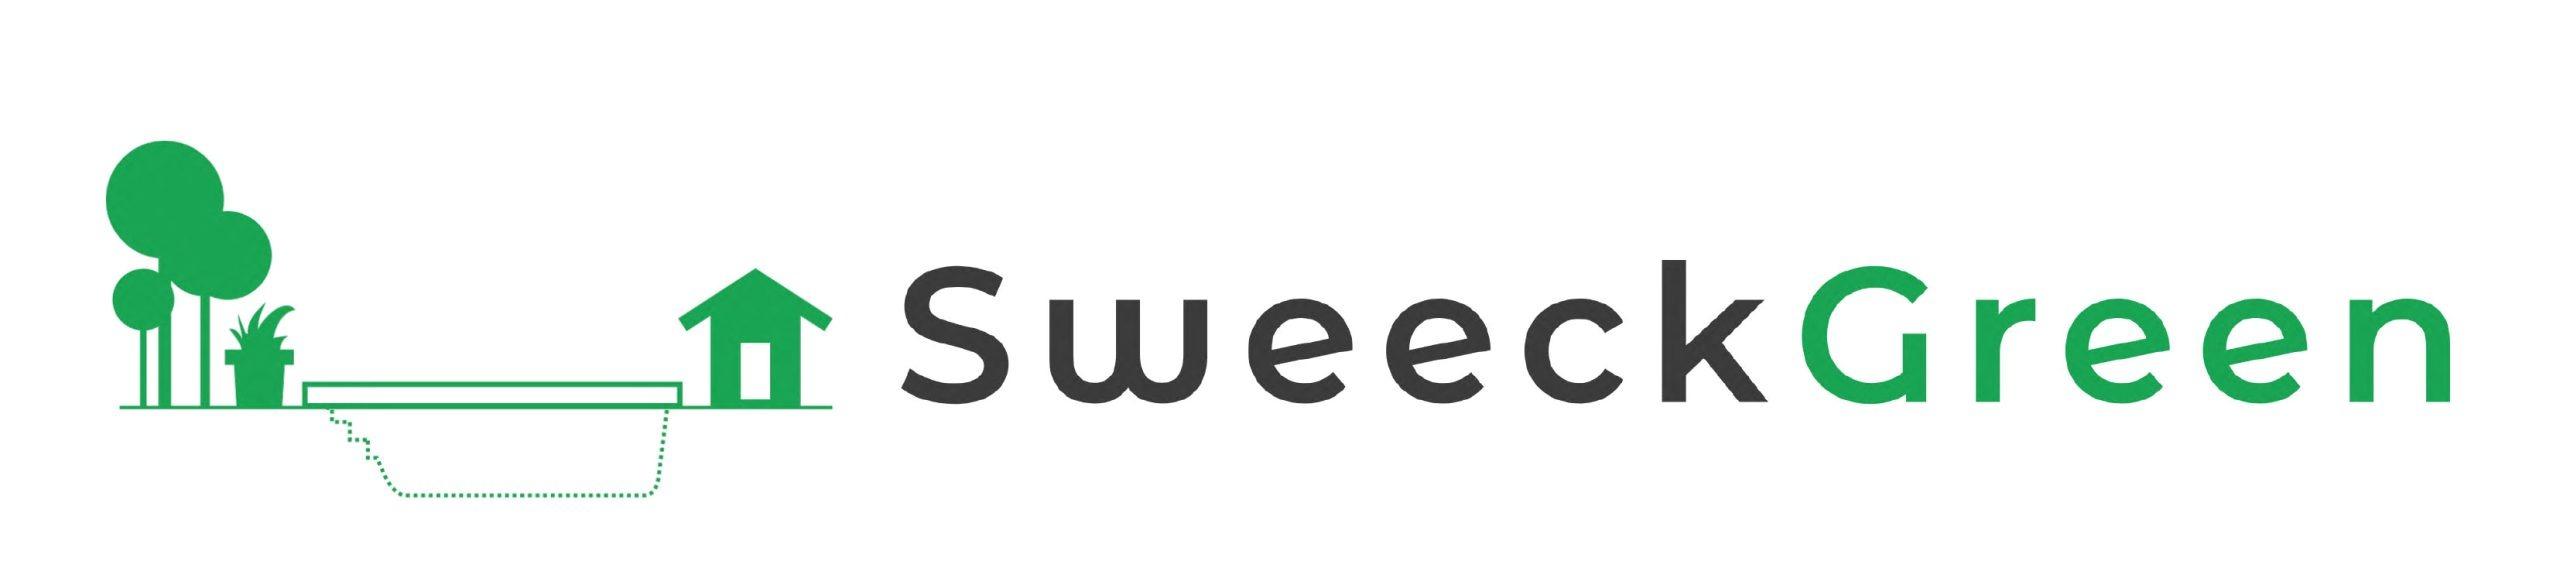 Sweeck Green logo